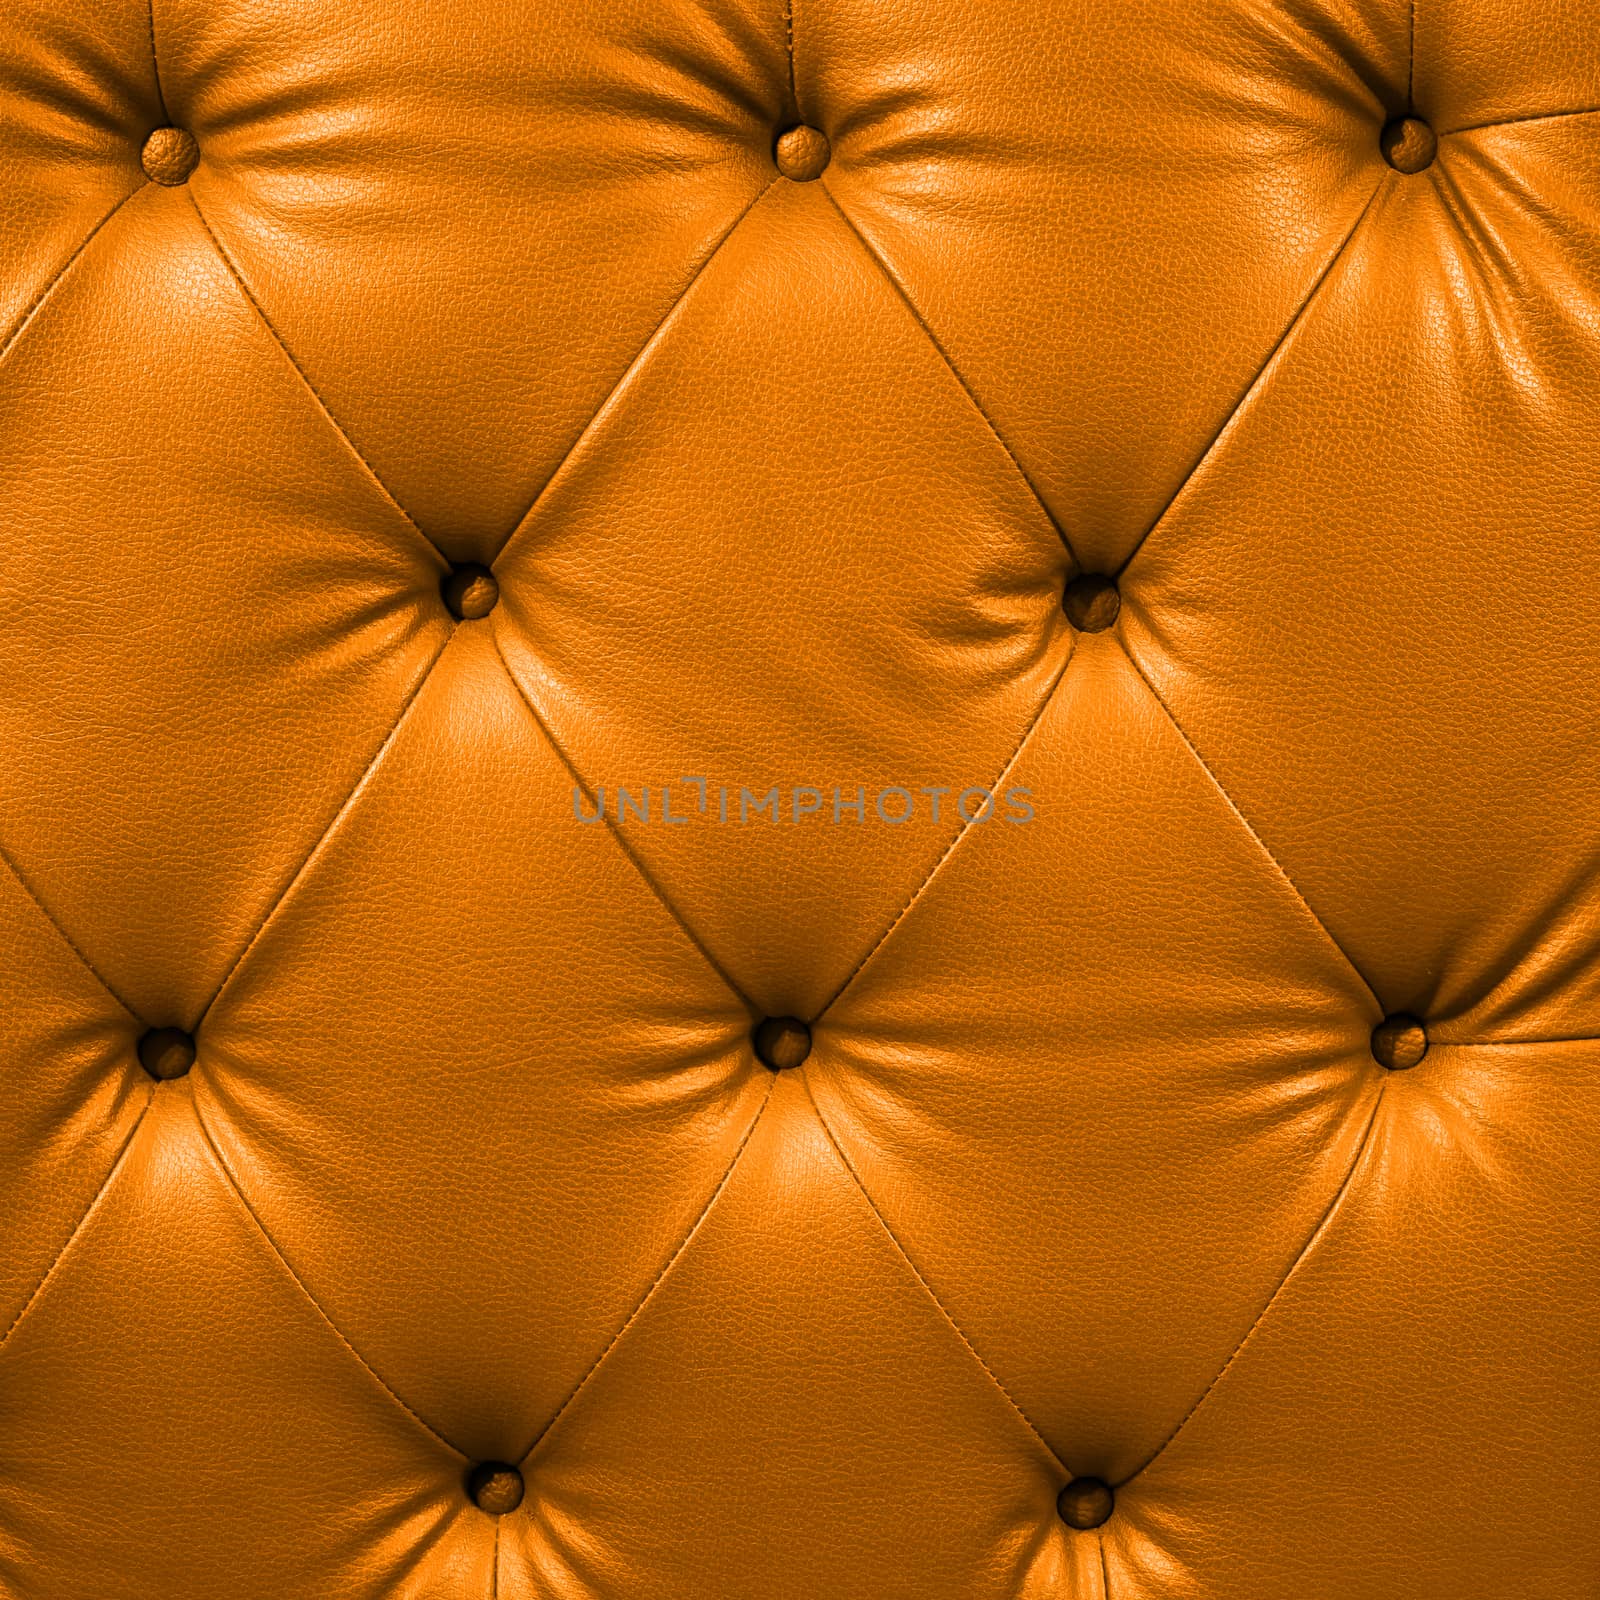 Close up orange luxury buttoned black leather